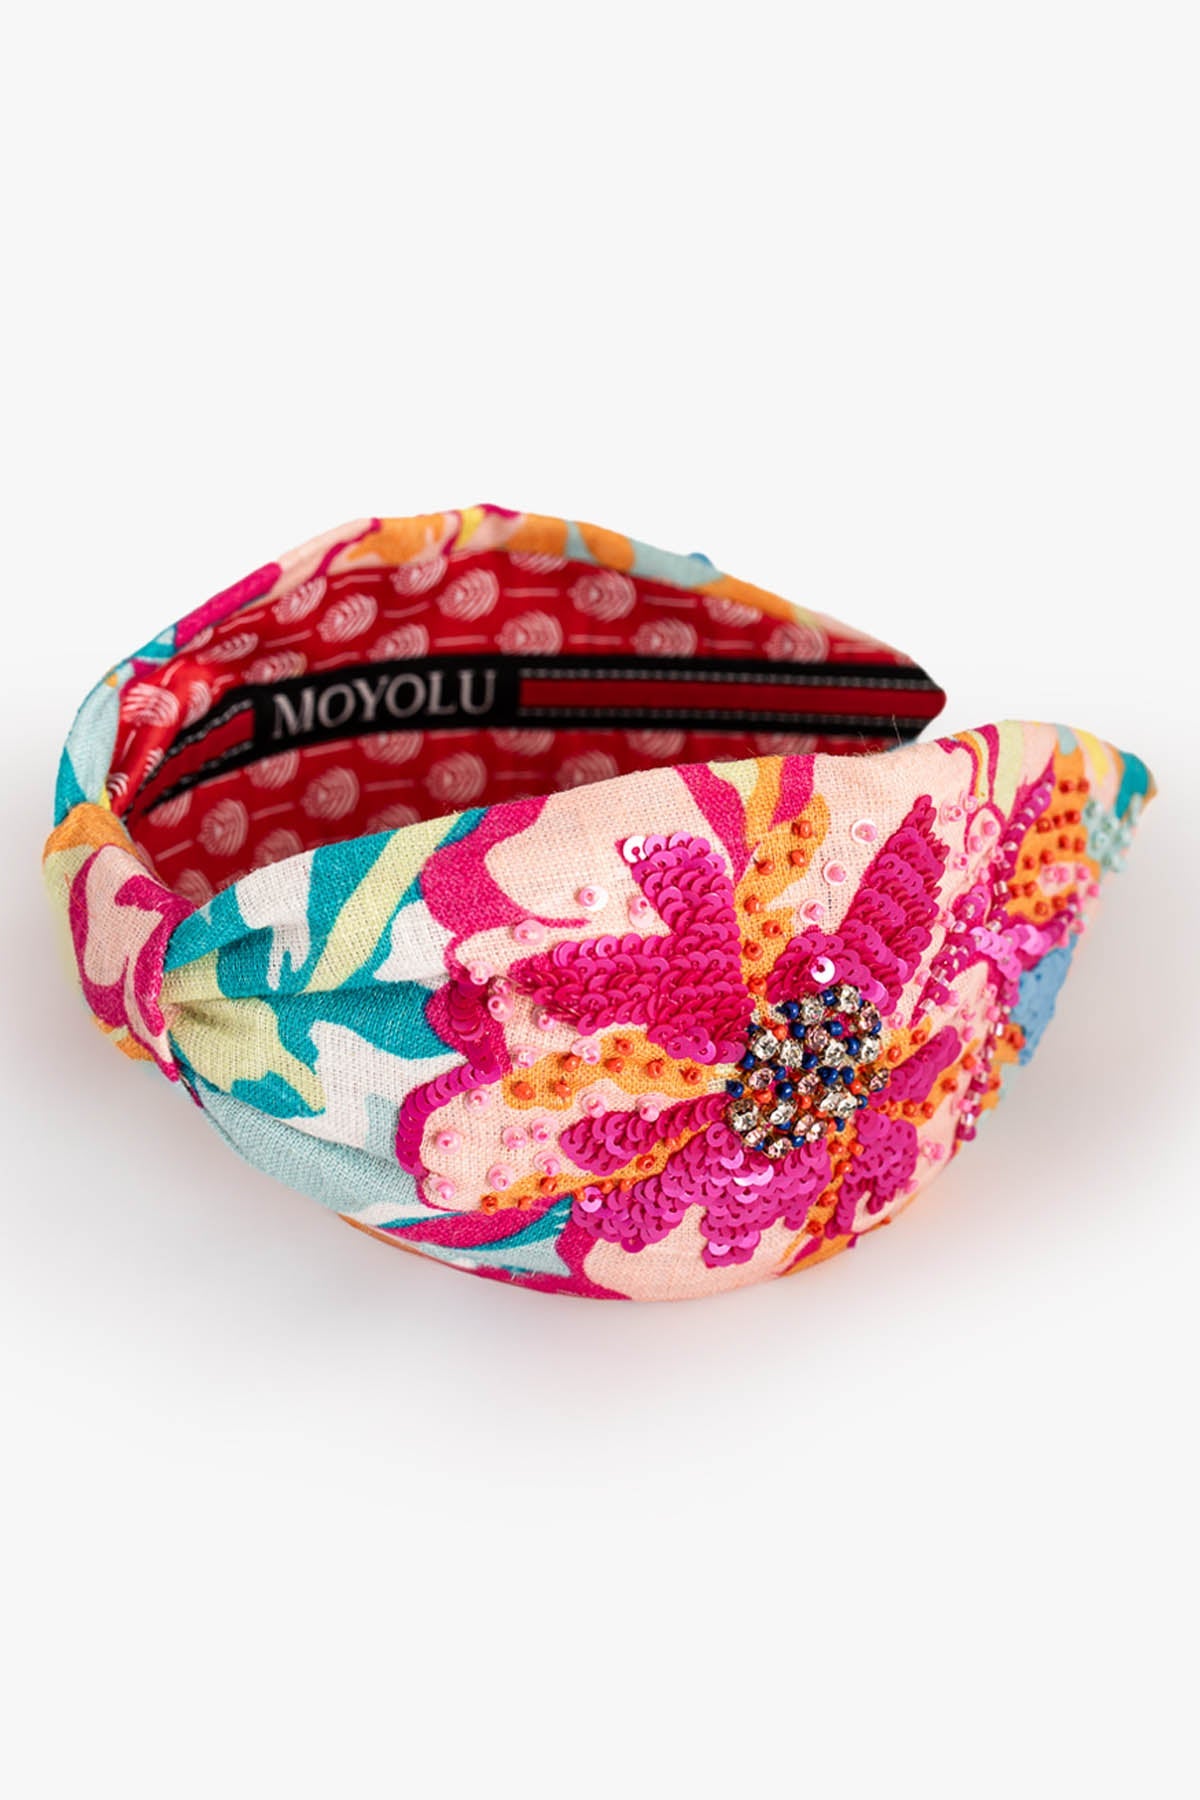 Moyolu Multicolor Printed Headband Accessories online at ScrollnShops